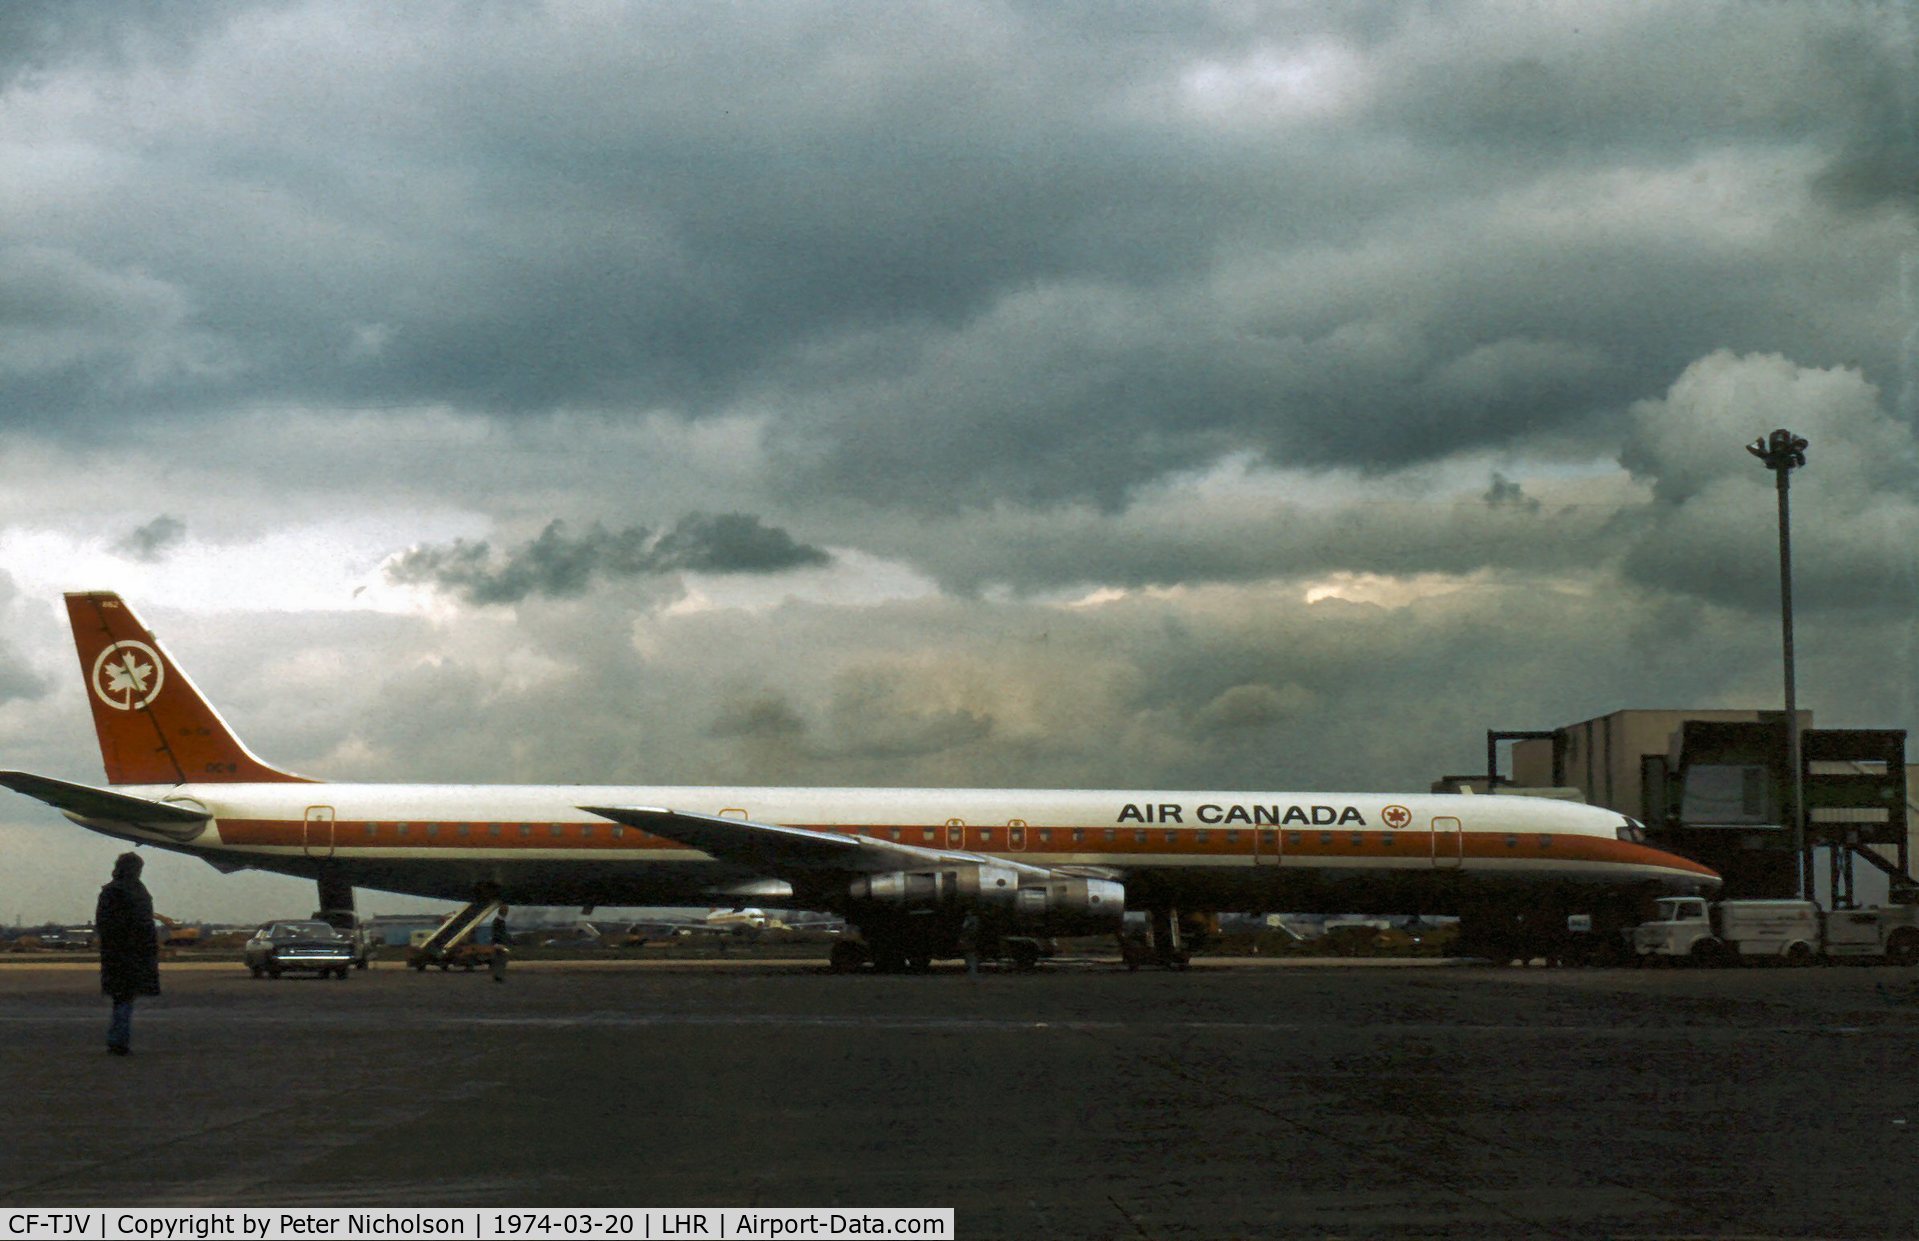 CF-TJV, 1967 Douglas DC-8-61 C/N 45892, DC-8-61 of Air Canada parked at Heathrow in March 1974.